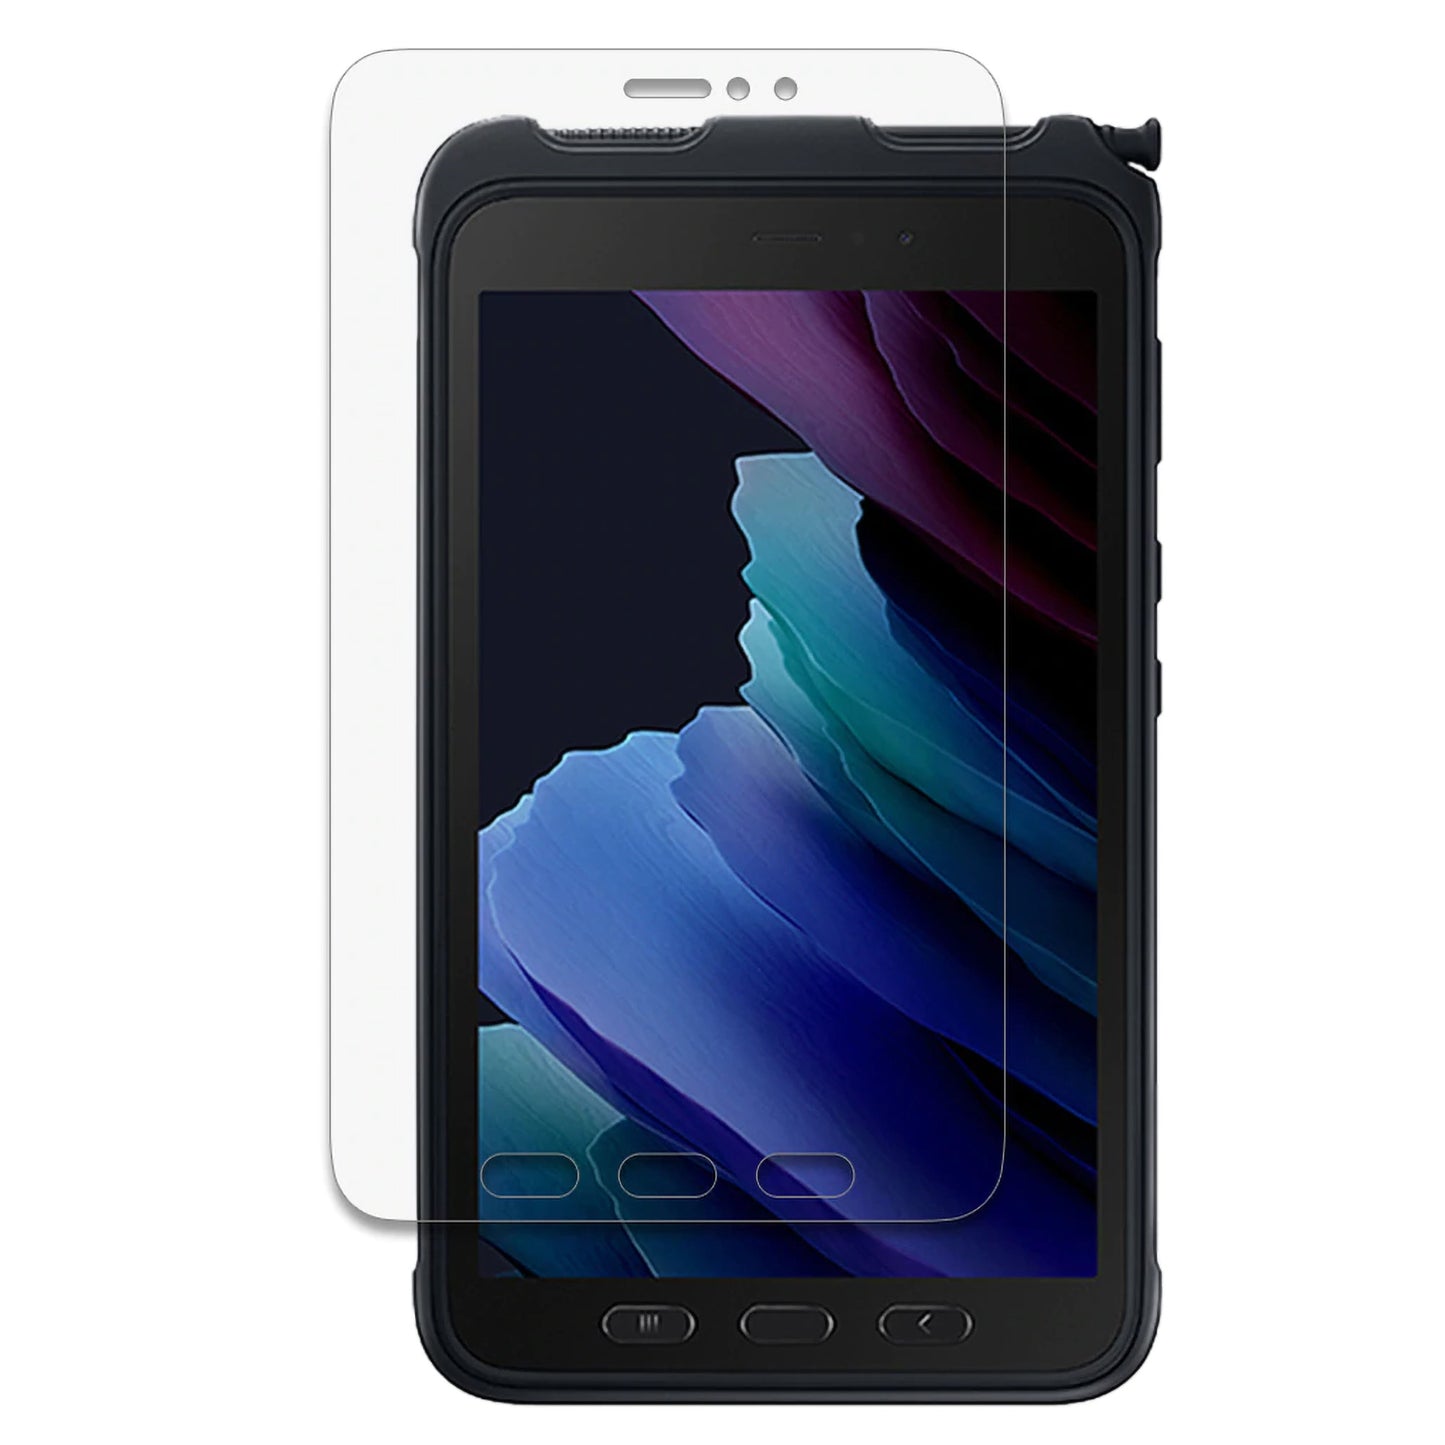 [3 Pack] MEZON Samsung Galaxy Tab Active3 8.0" Anti-Glare Matte Film Screen Protector (SM-T575, Matte)